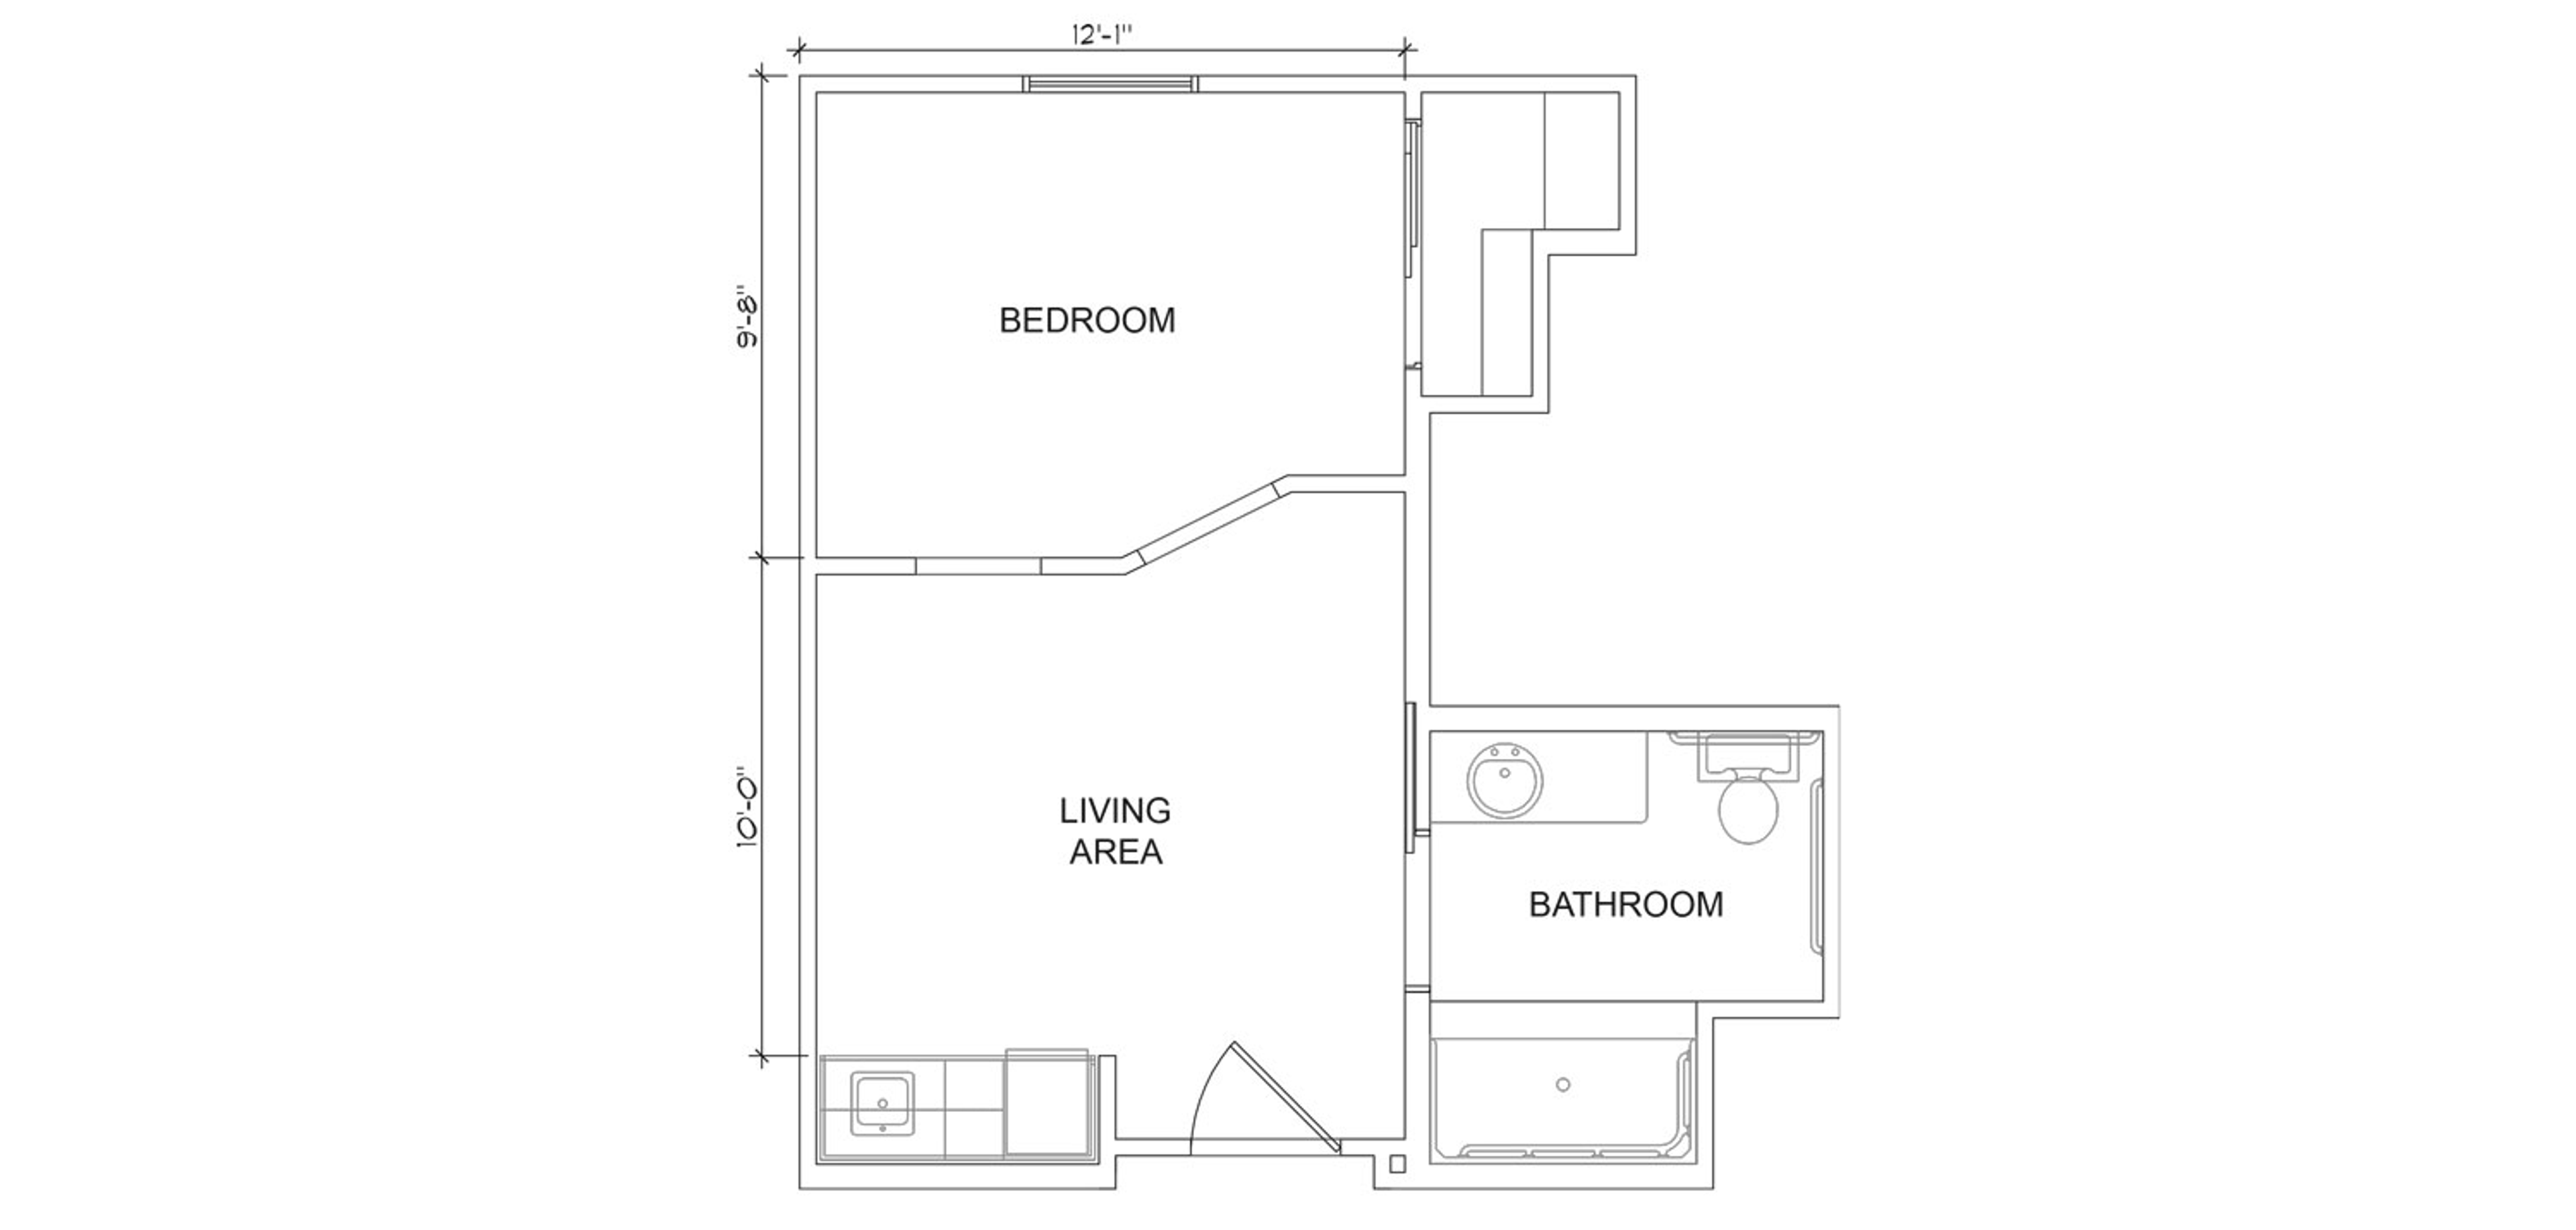 Floorplan - Spring Lake - 1 bed, 1 bath, Standard Assisted Living